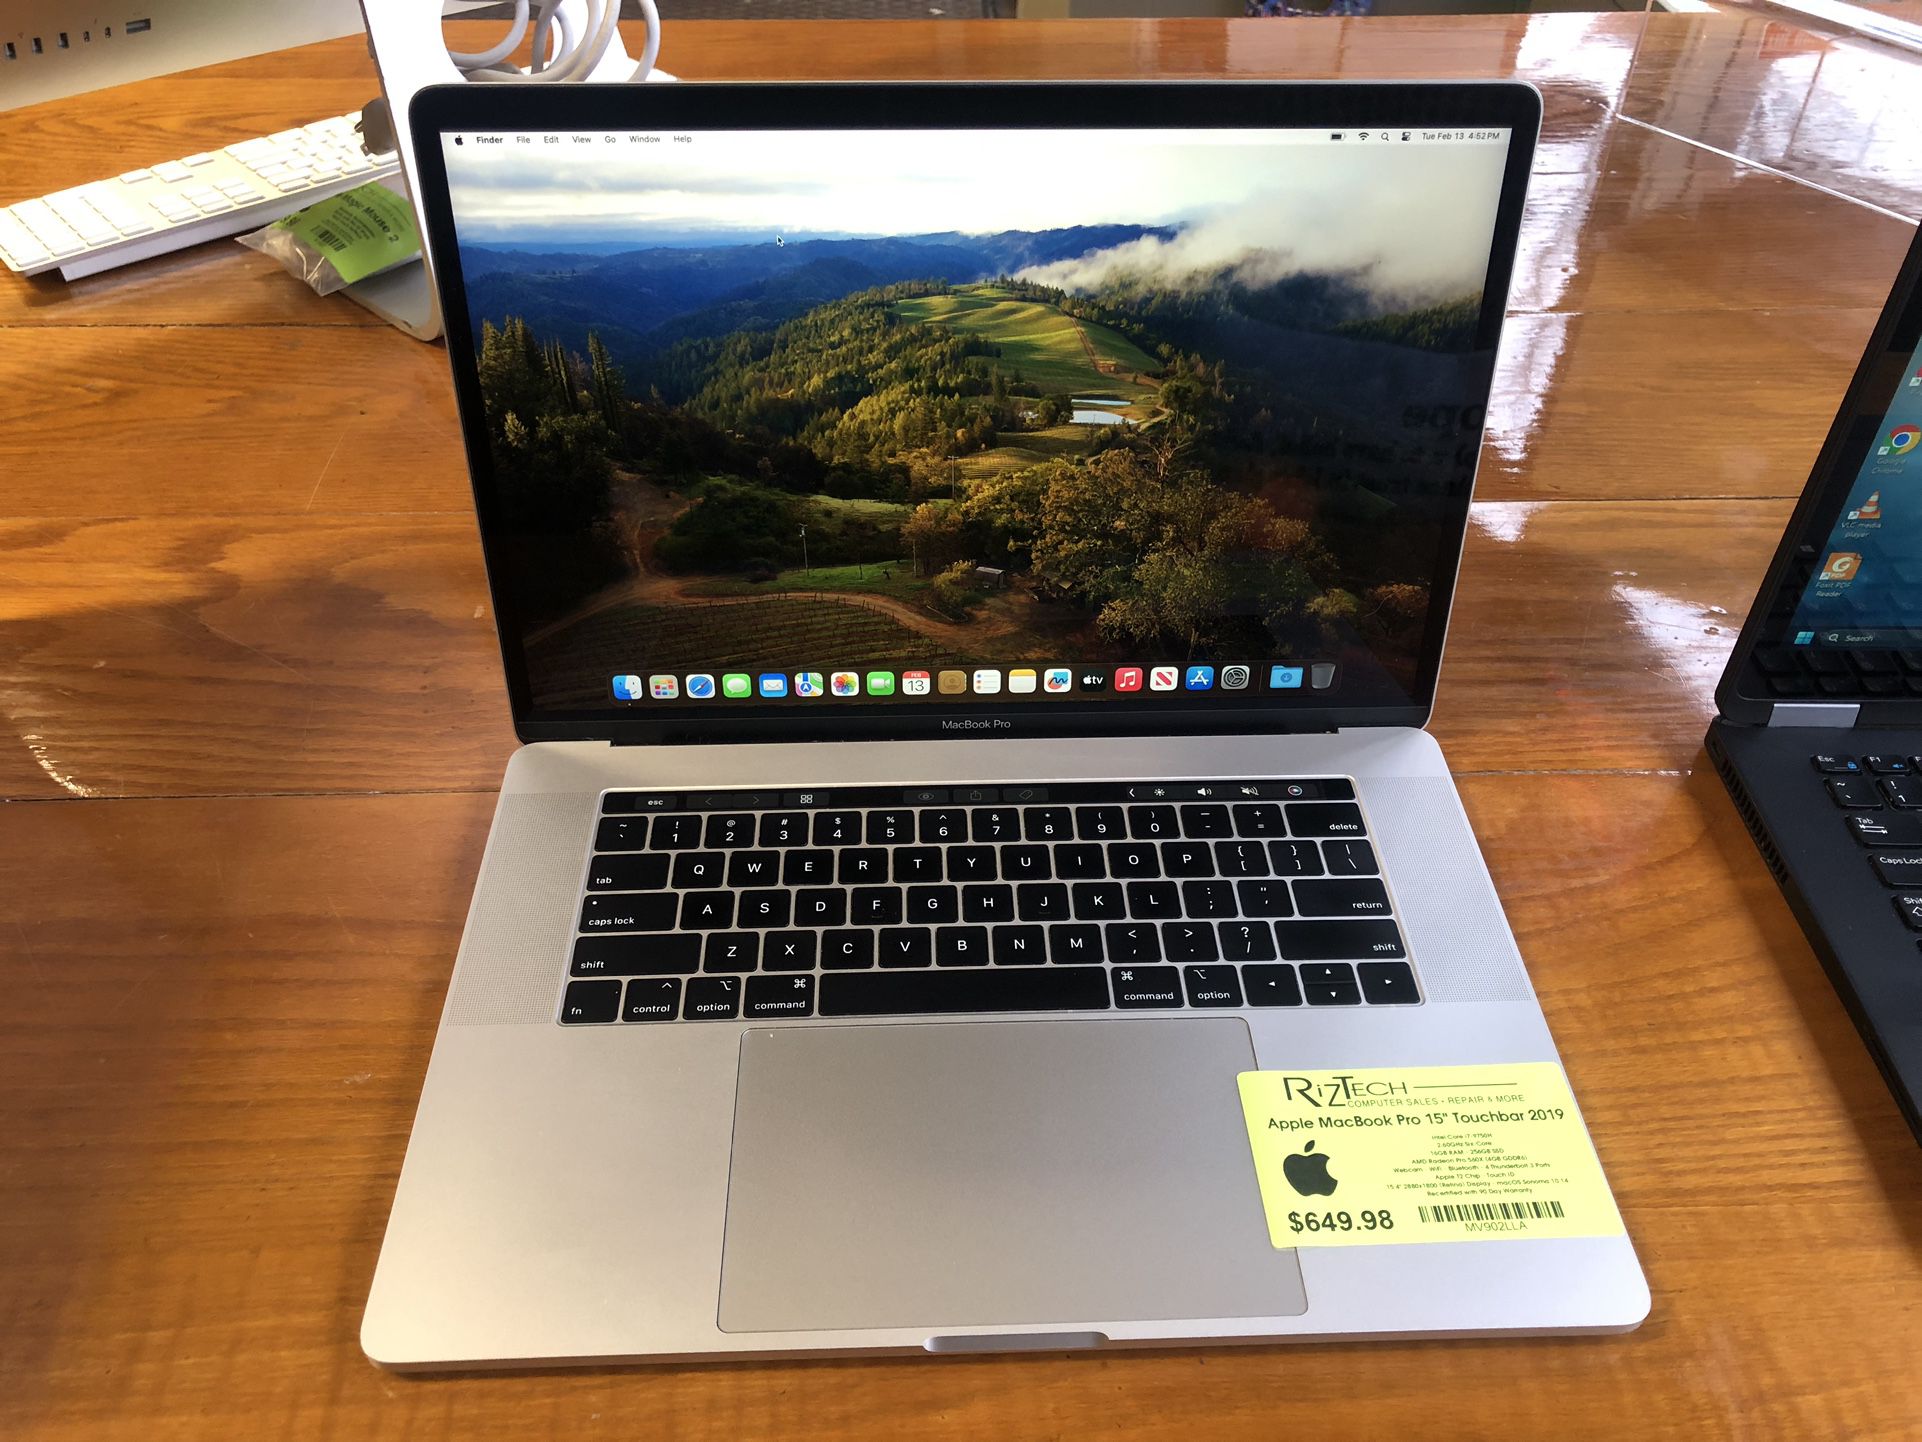 Apple MacBook Pro 15" Touchbar 2019